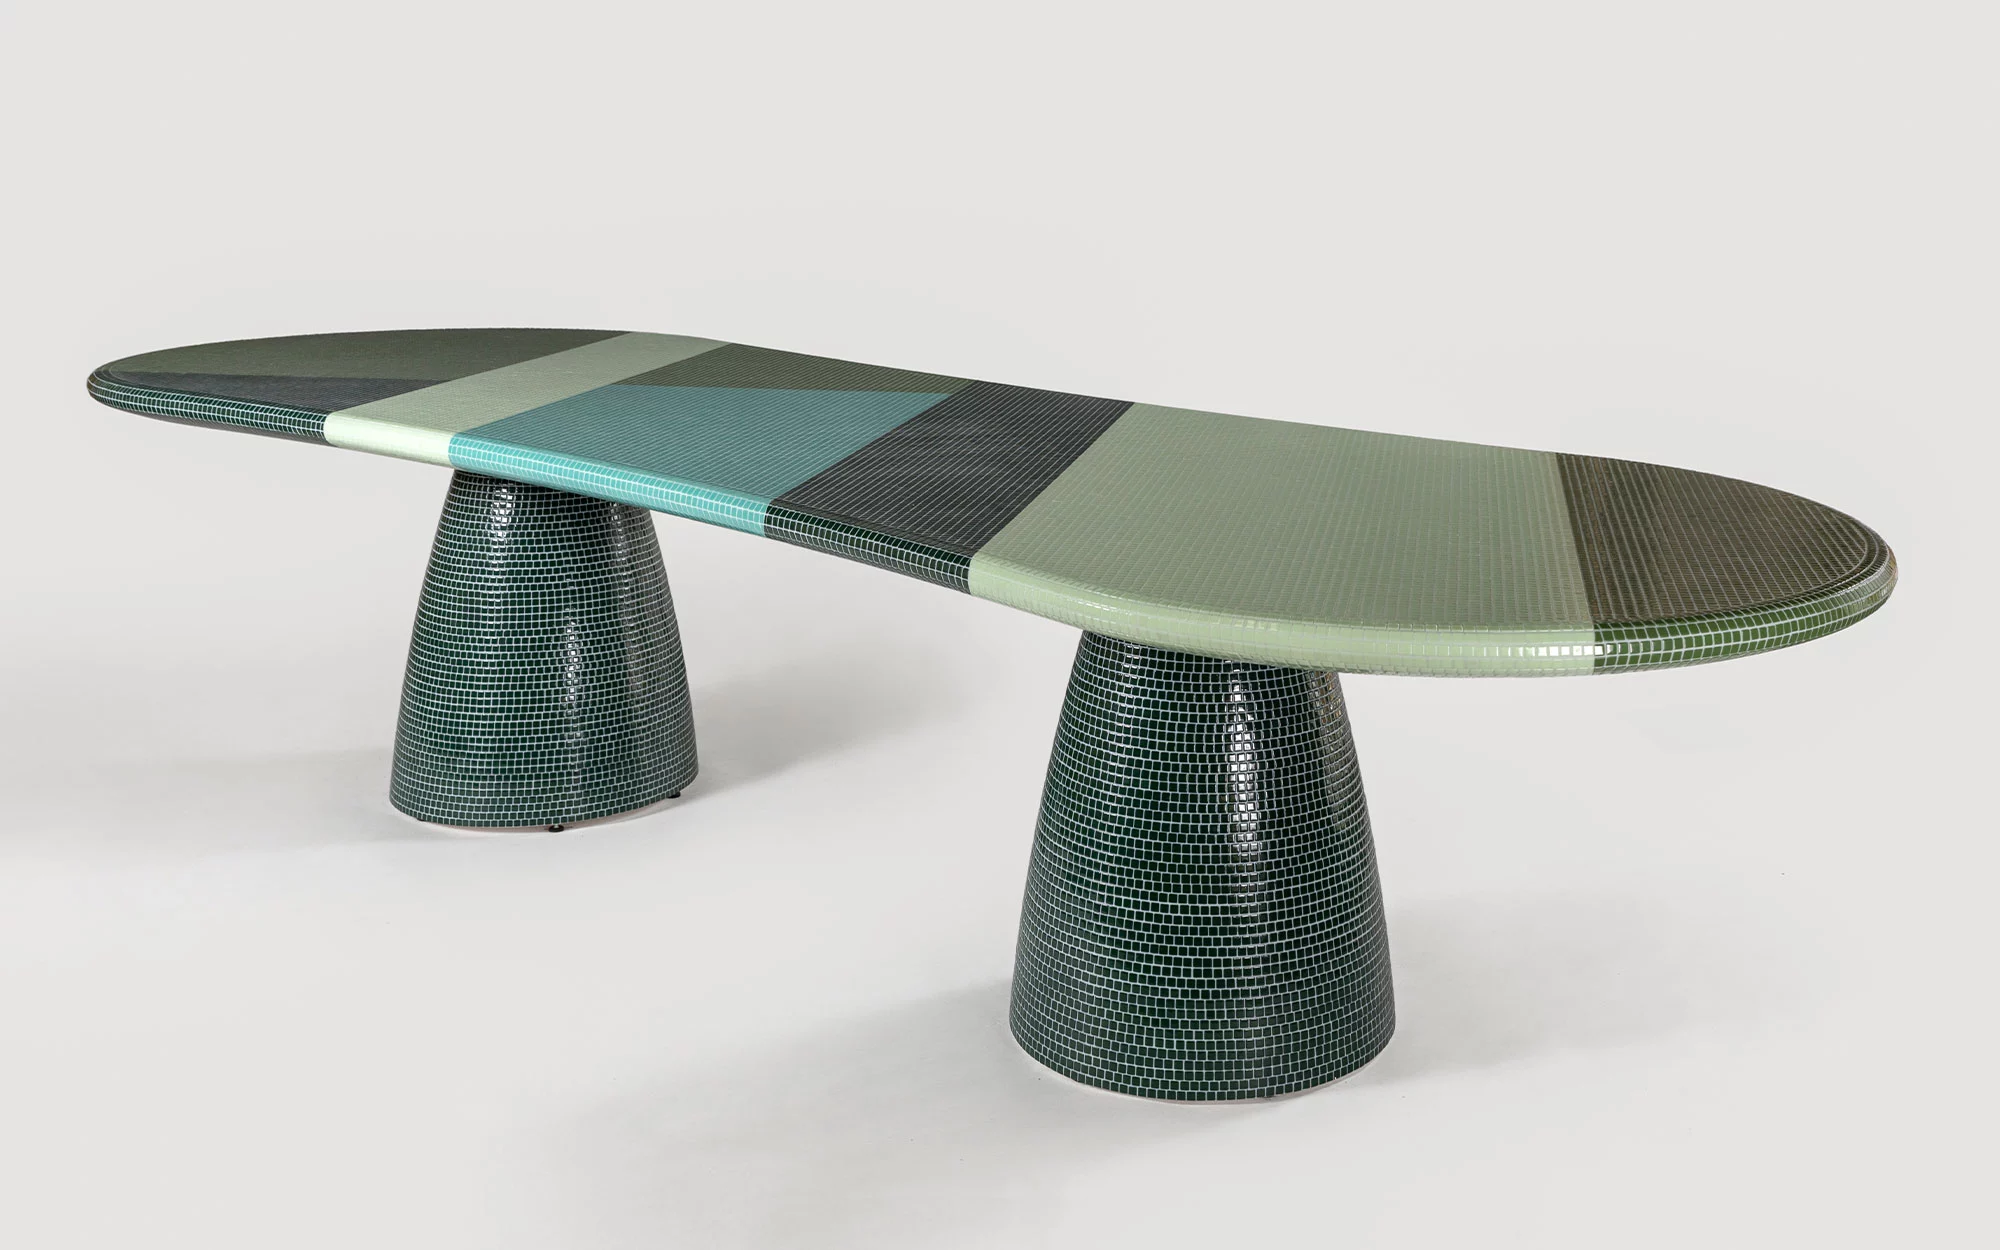 Umbria Dining Table - Alessandro Mendini - Table - Galerie kreo